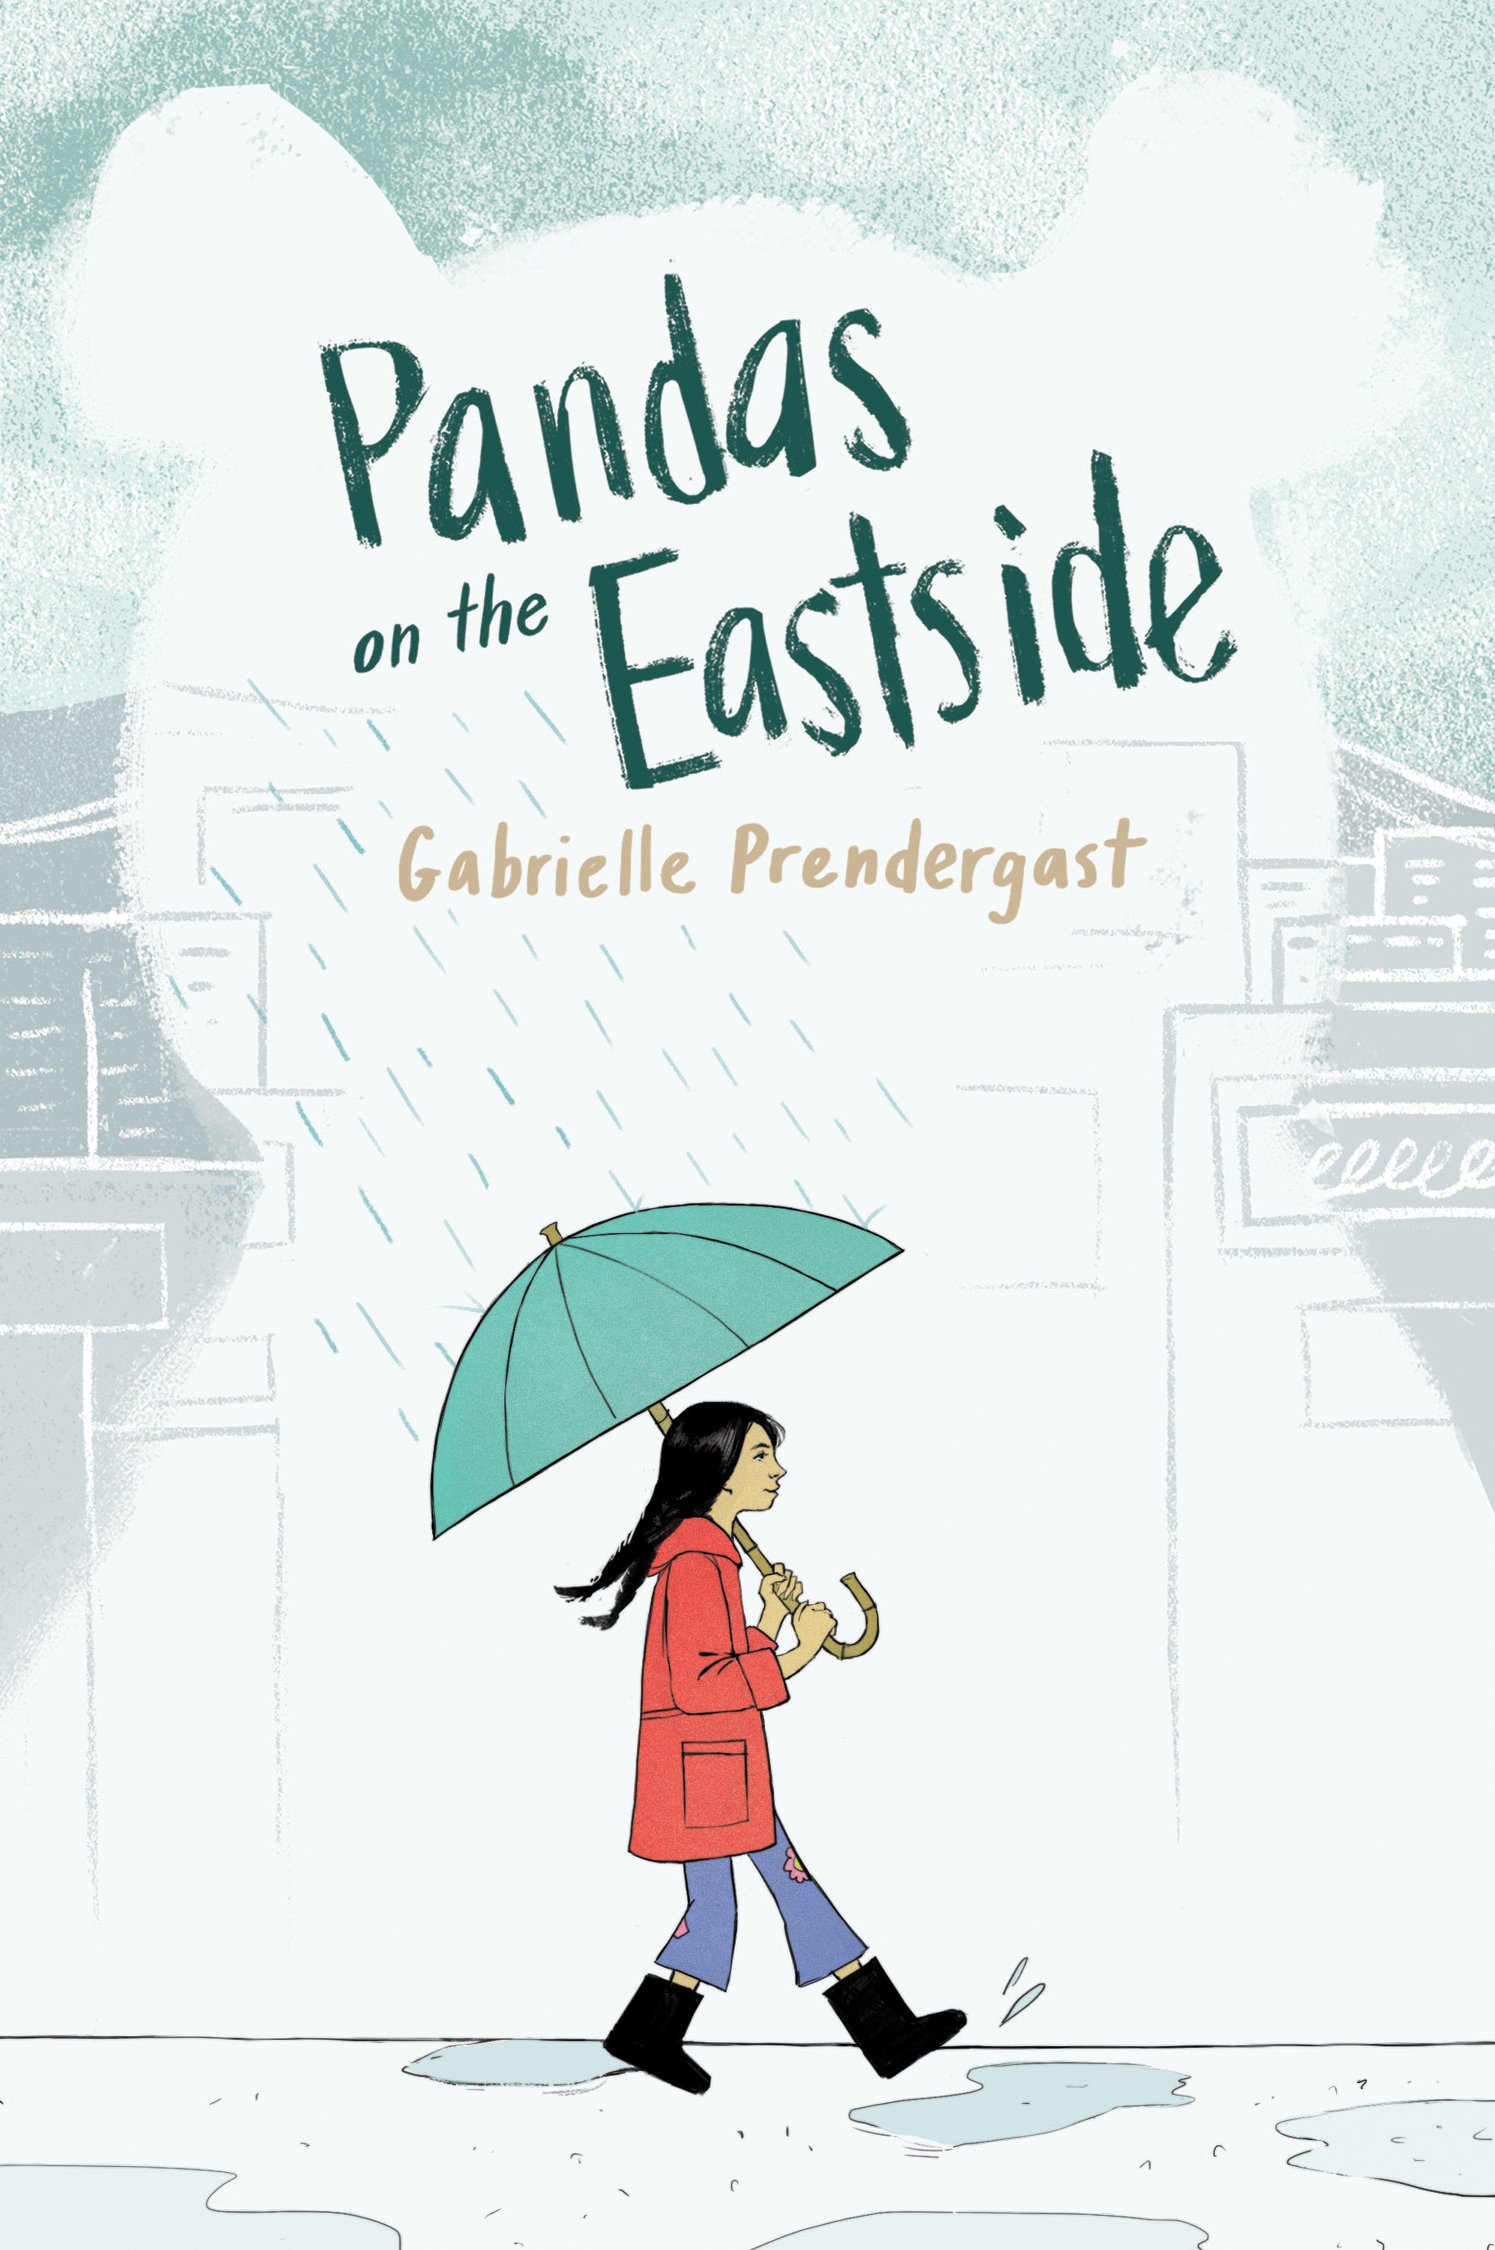 Pandas on the Eastside by Gabrielle Prendergast